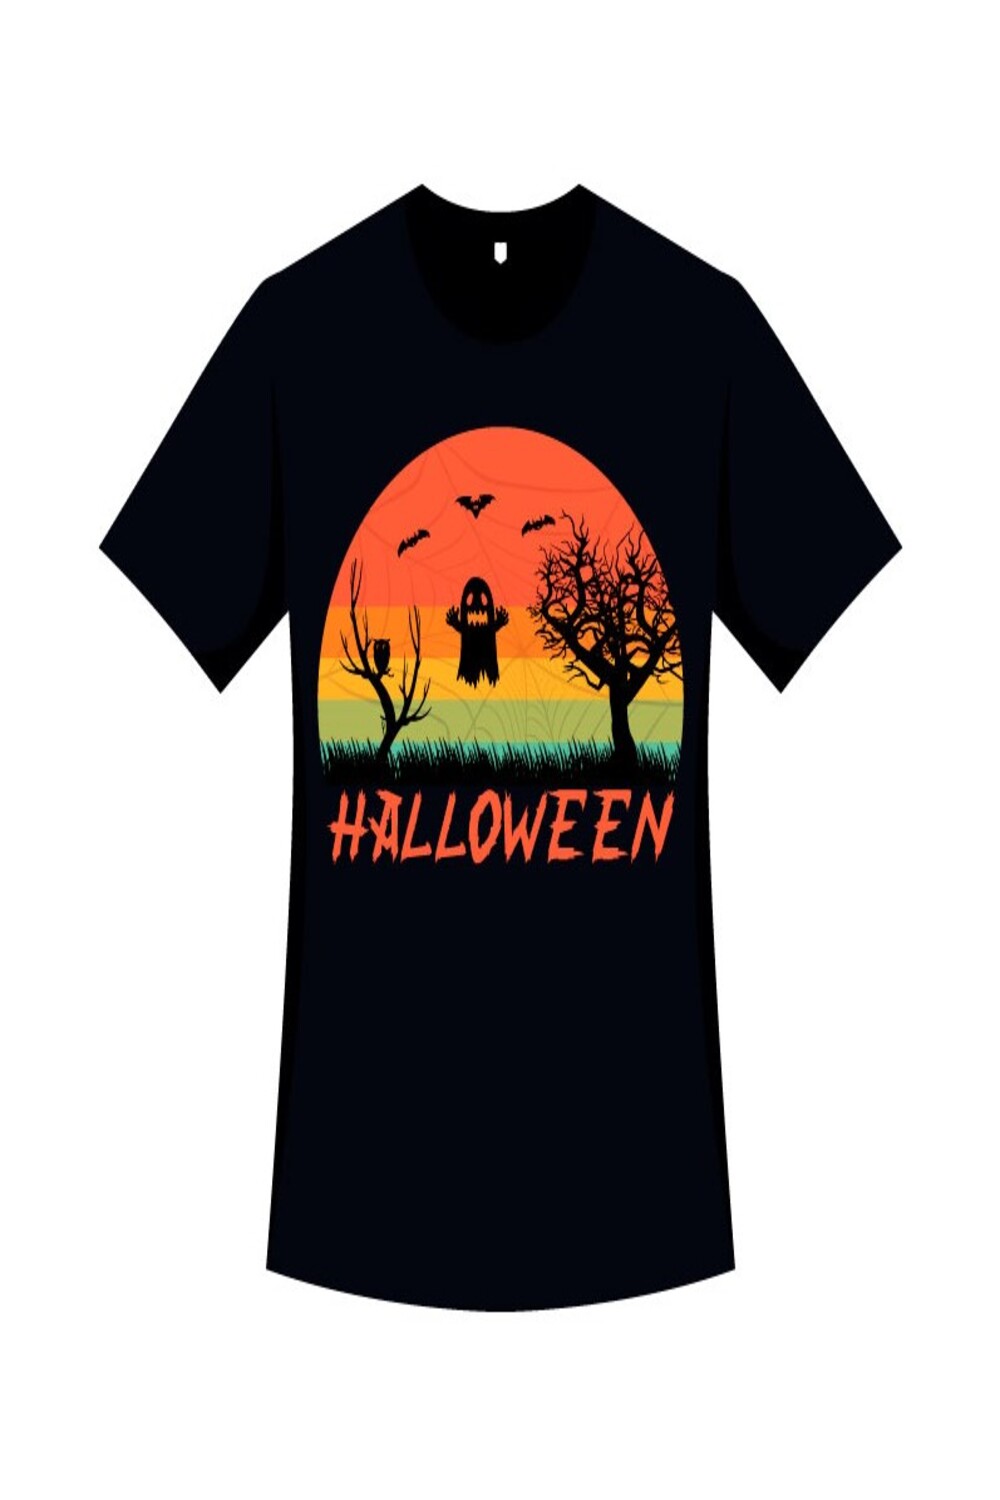 Retro Color Halloween T-shirt Design Pinterest image.